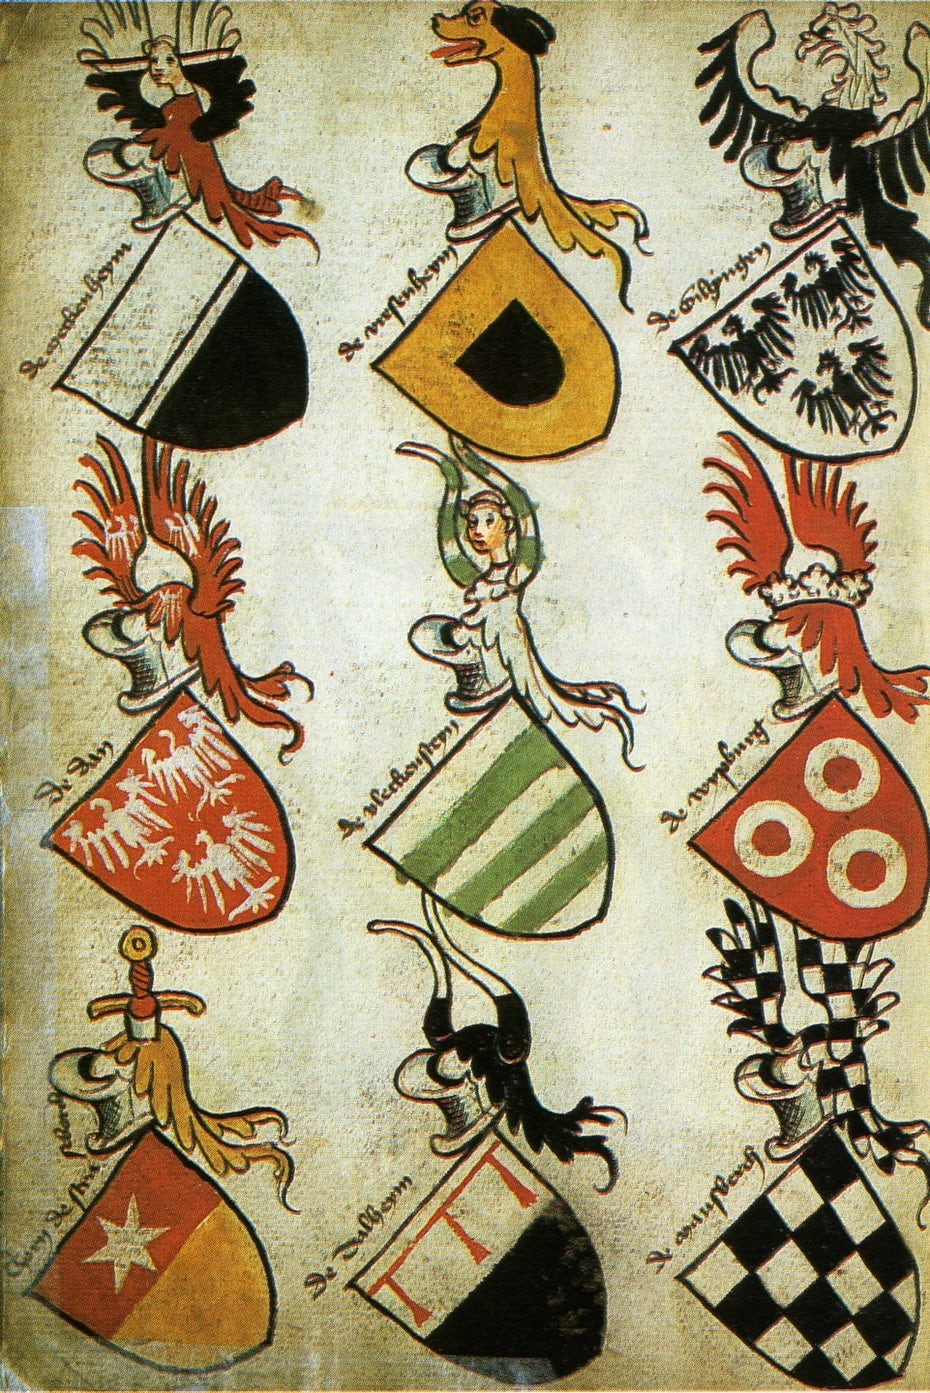 1600s German coats-of-arms